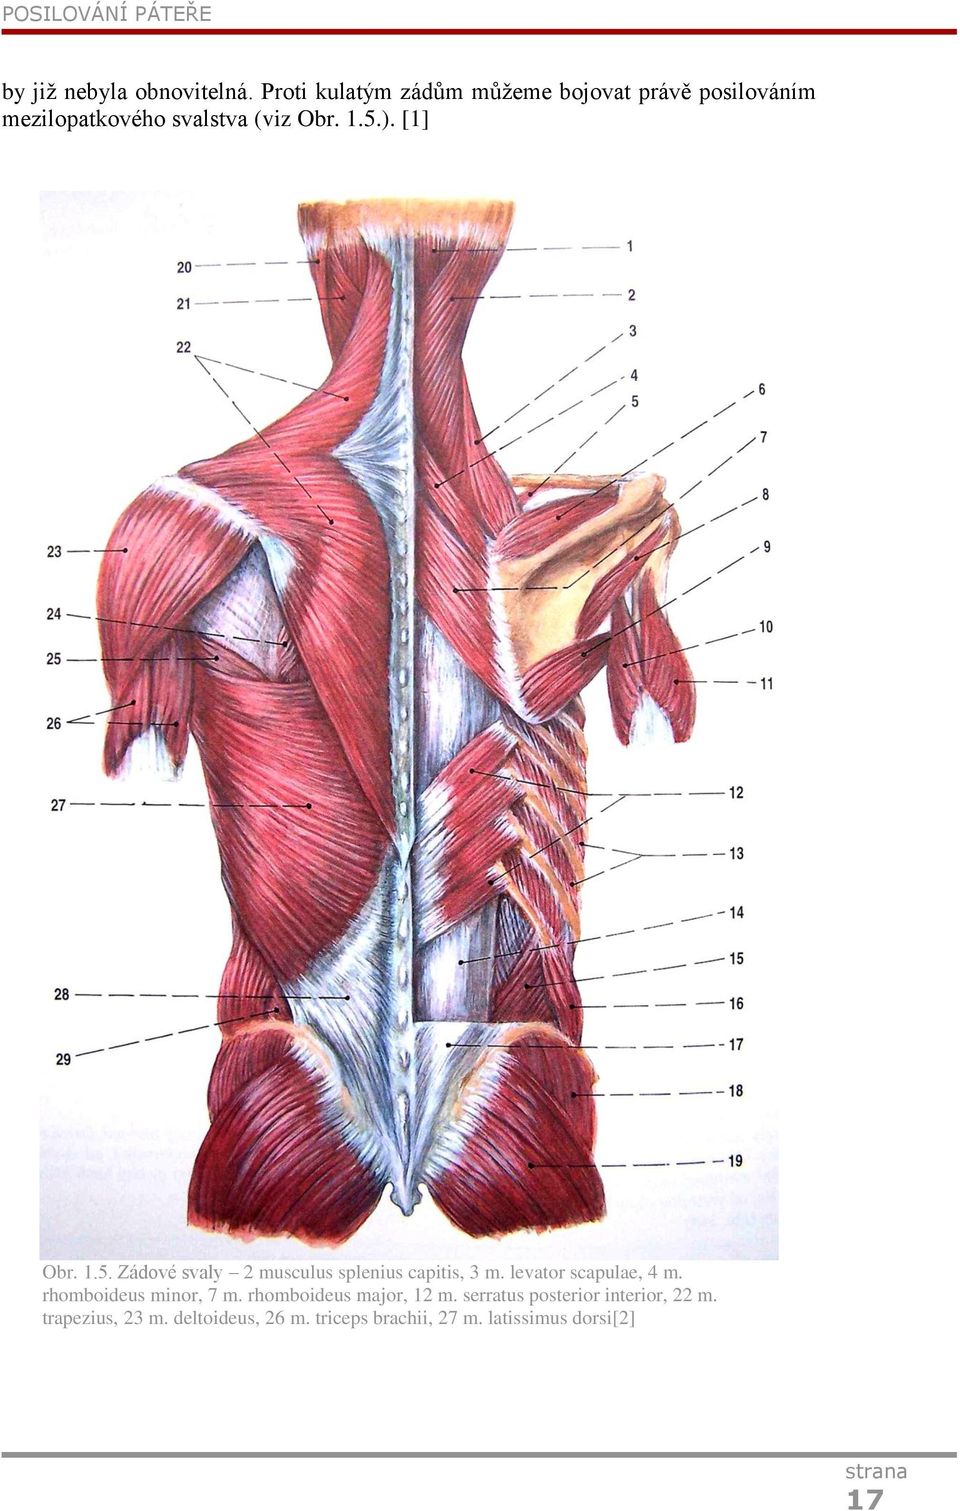 [1] Obr. 1.5. Zádové svaly 2 musculus splenius capitis, 3 m. levator scapulae, 4 m.